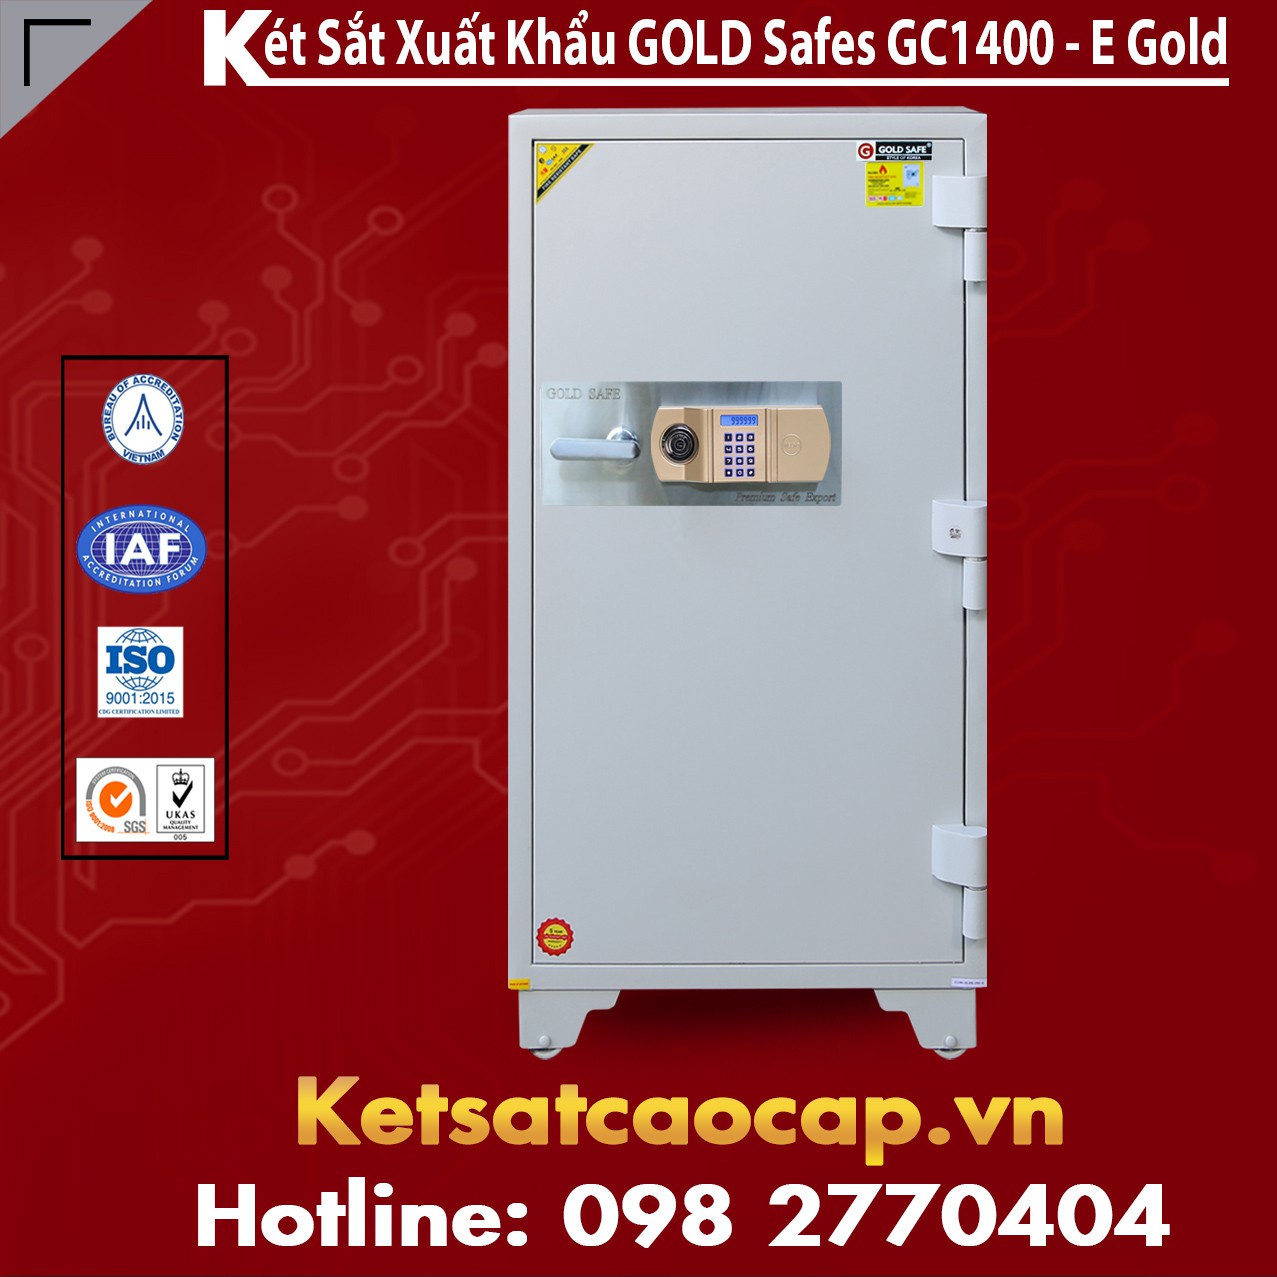 Két Sắt Thịnh Vượng GOLD SAFES GC1400 E Gold